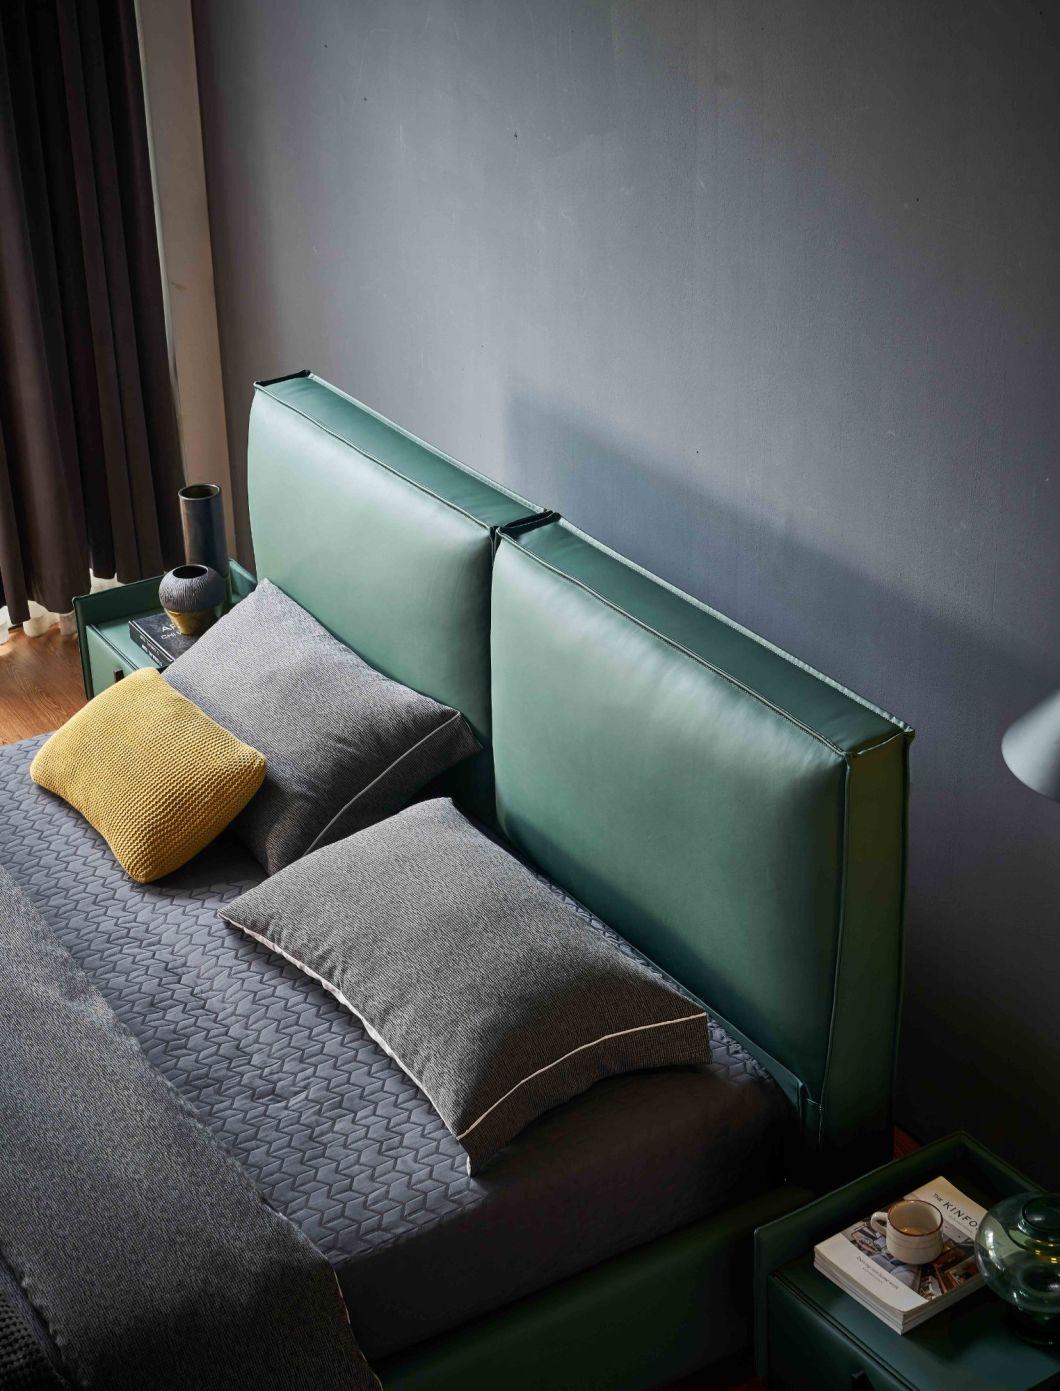 Gainsville Furniture Modern Bedroom Furniture Sets Italian Bed Green Bed King Bed Gc2118